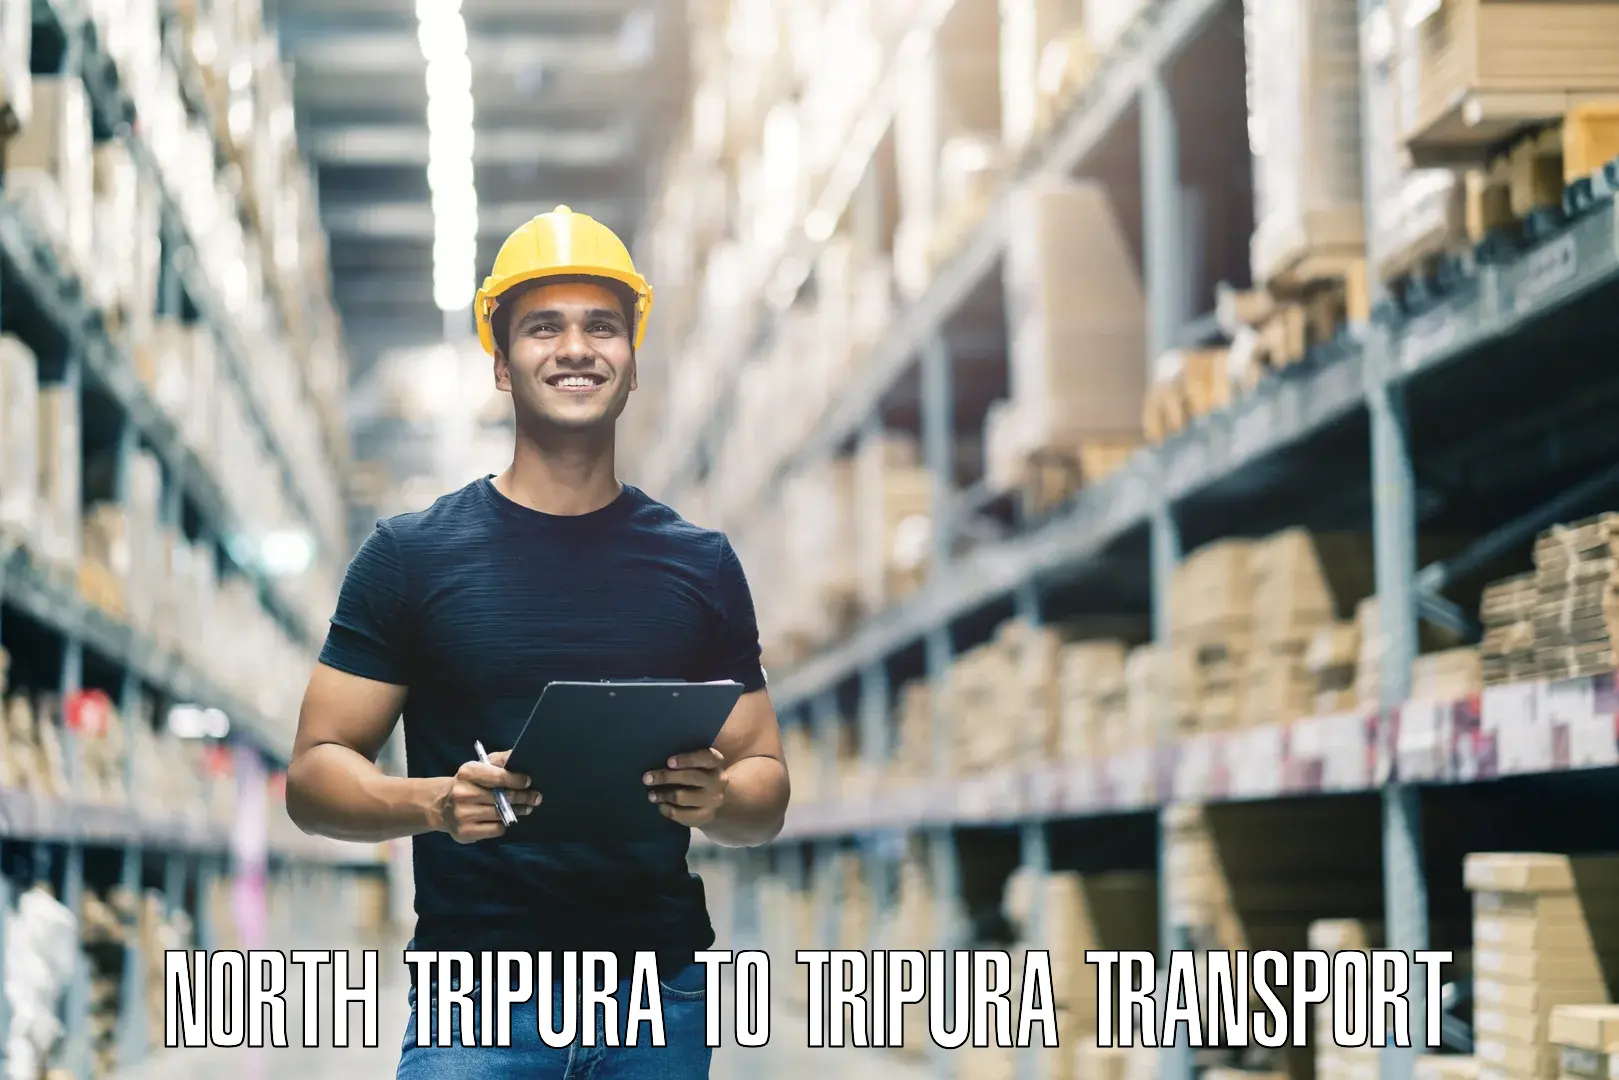 Online transport service North Tripura to Tripura